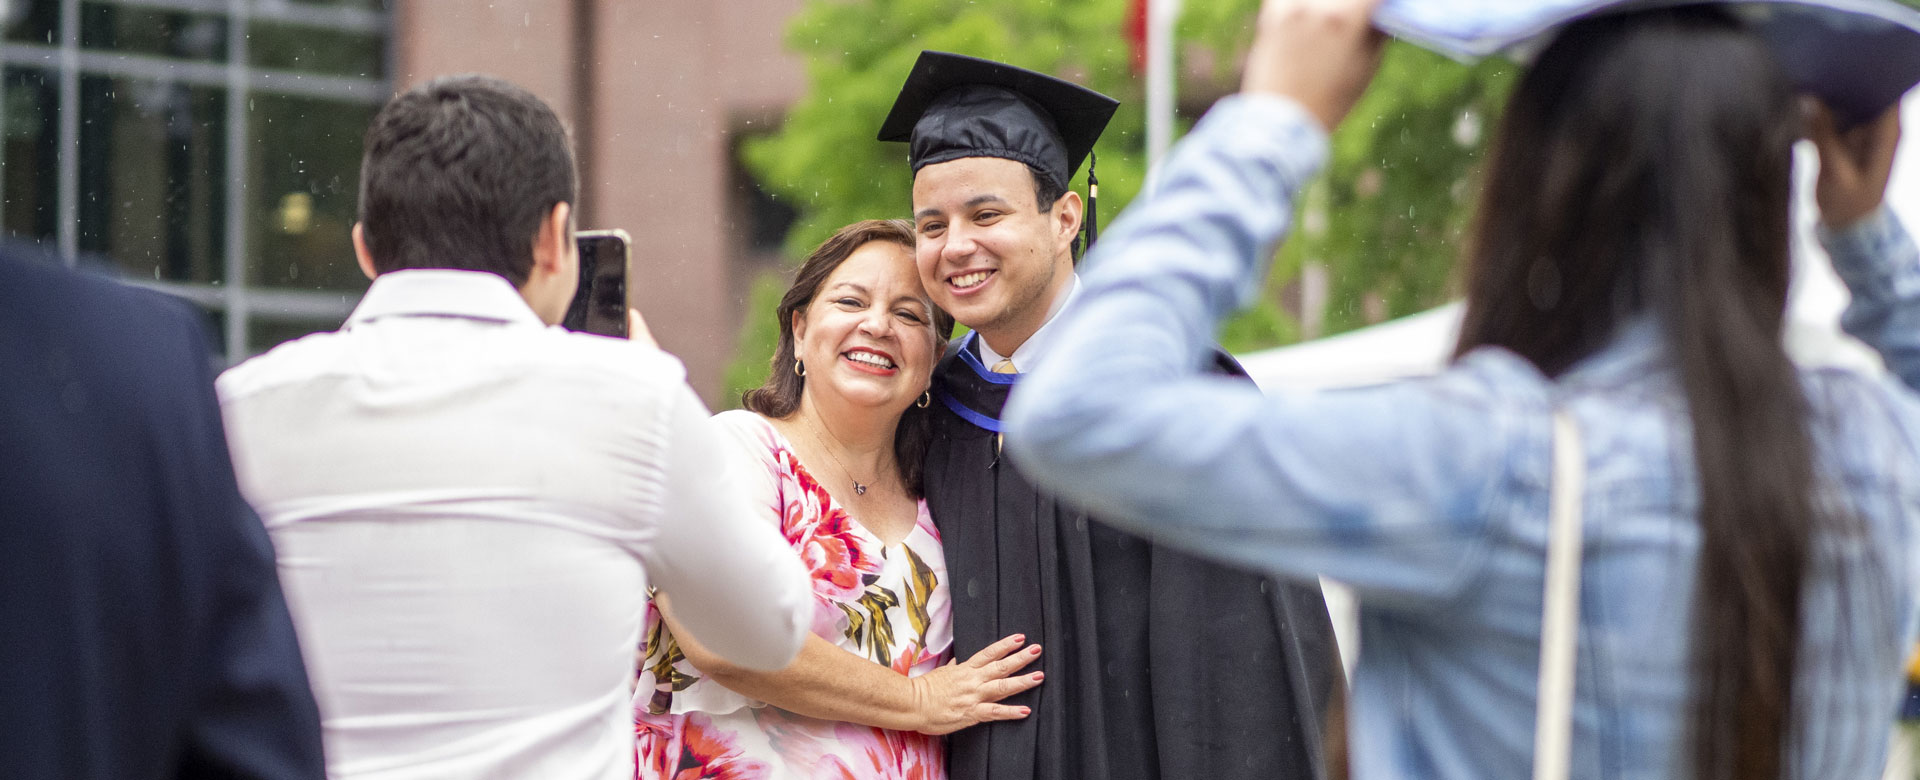 Family & Guests Okanagan Graduation